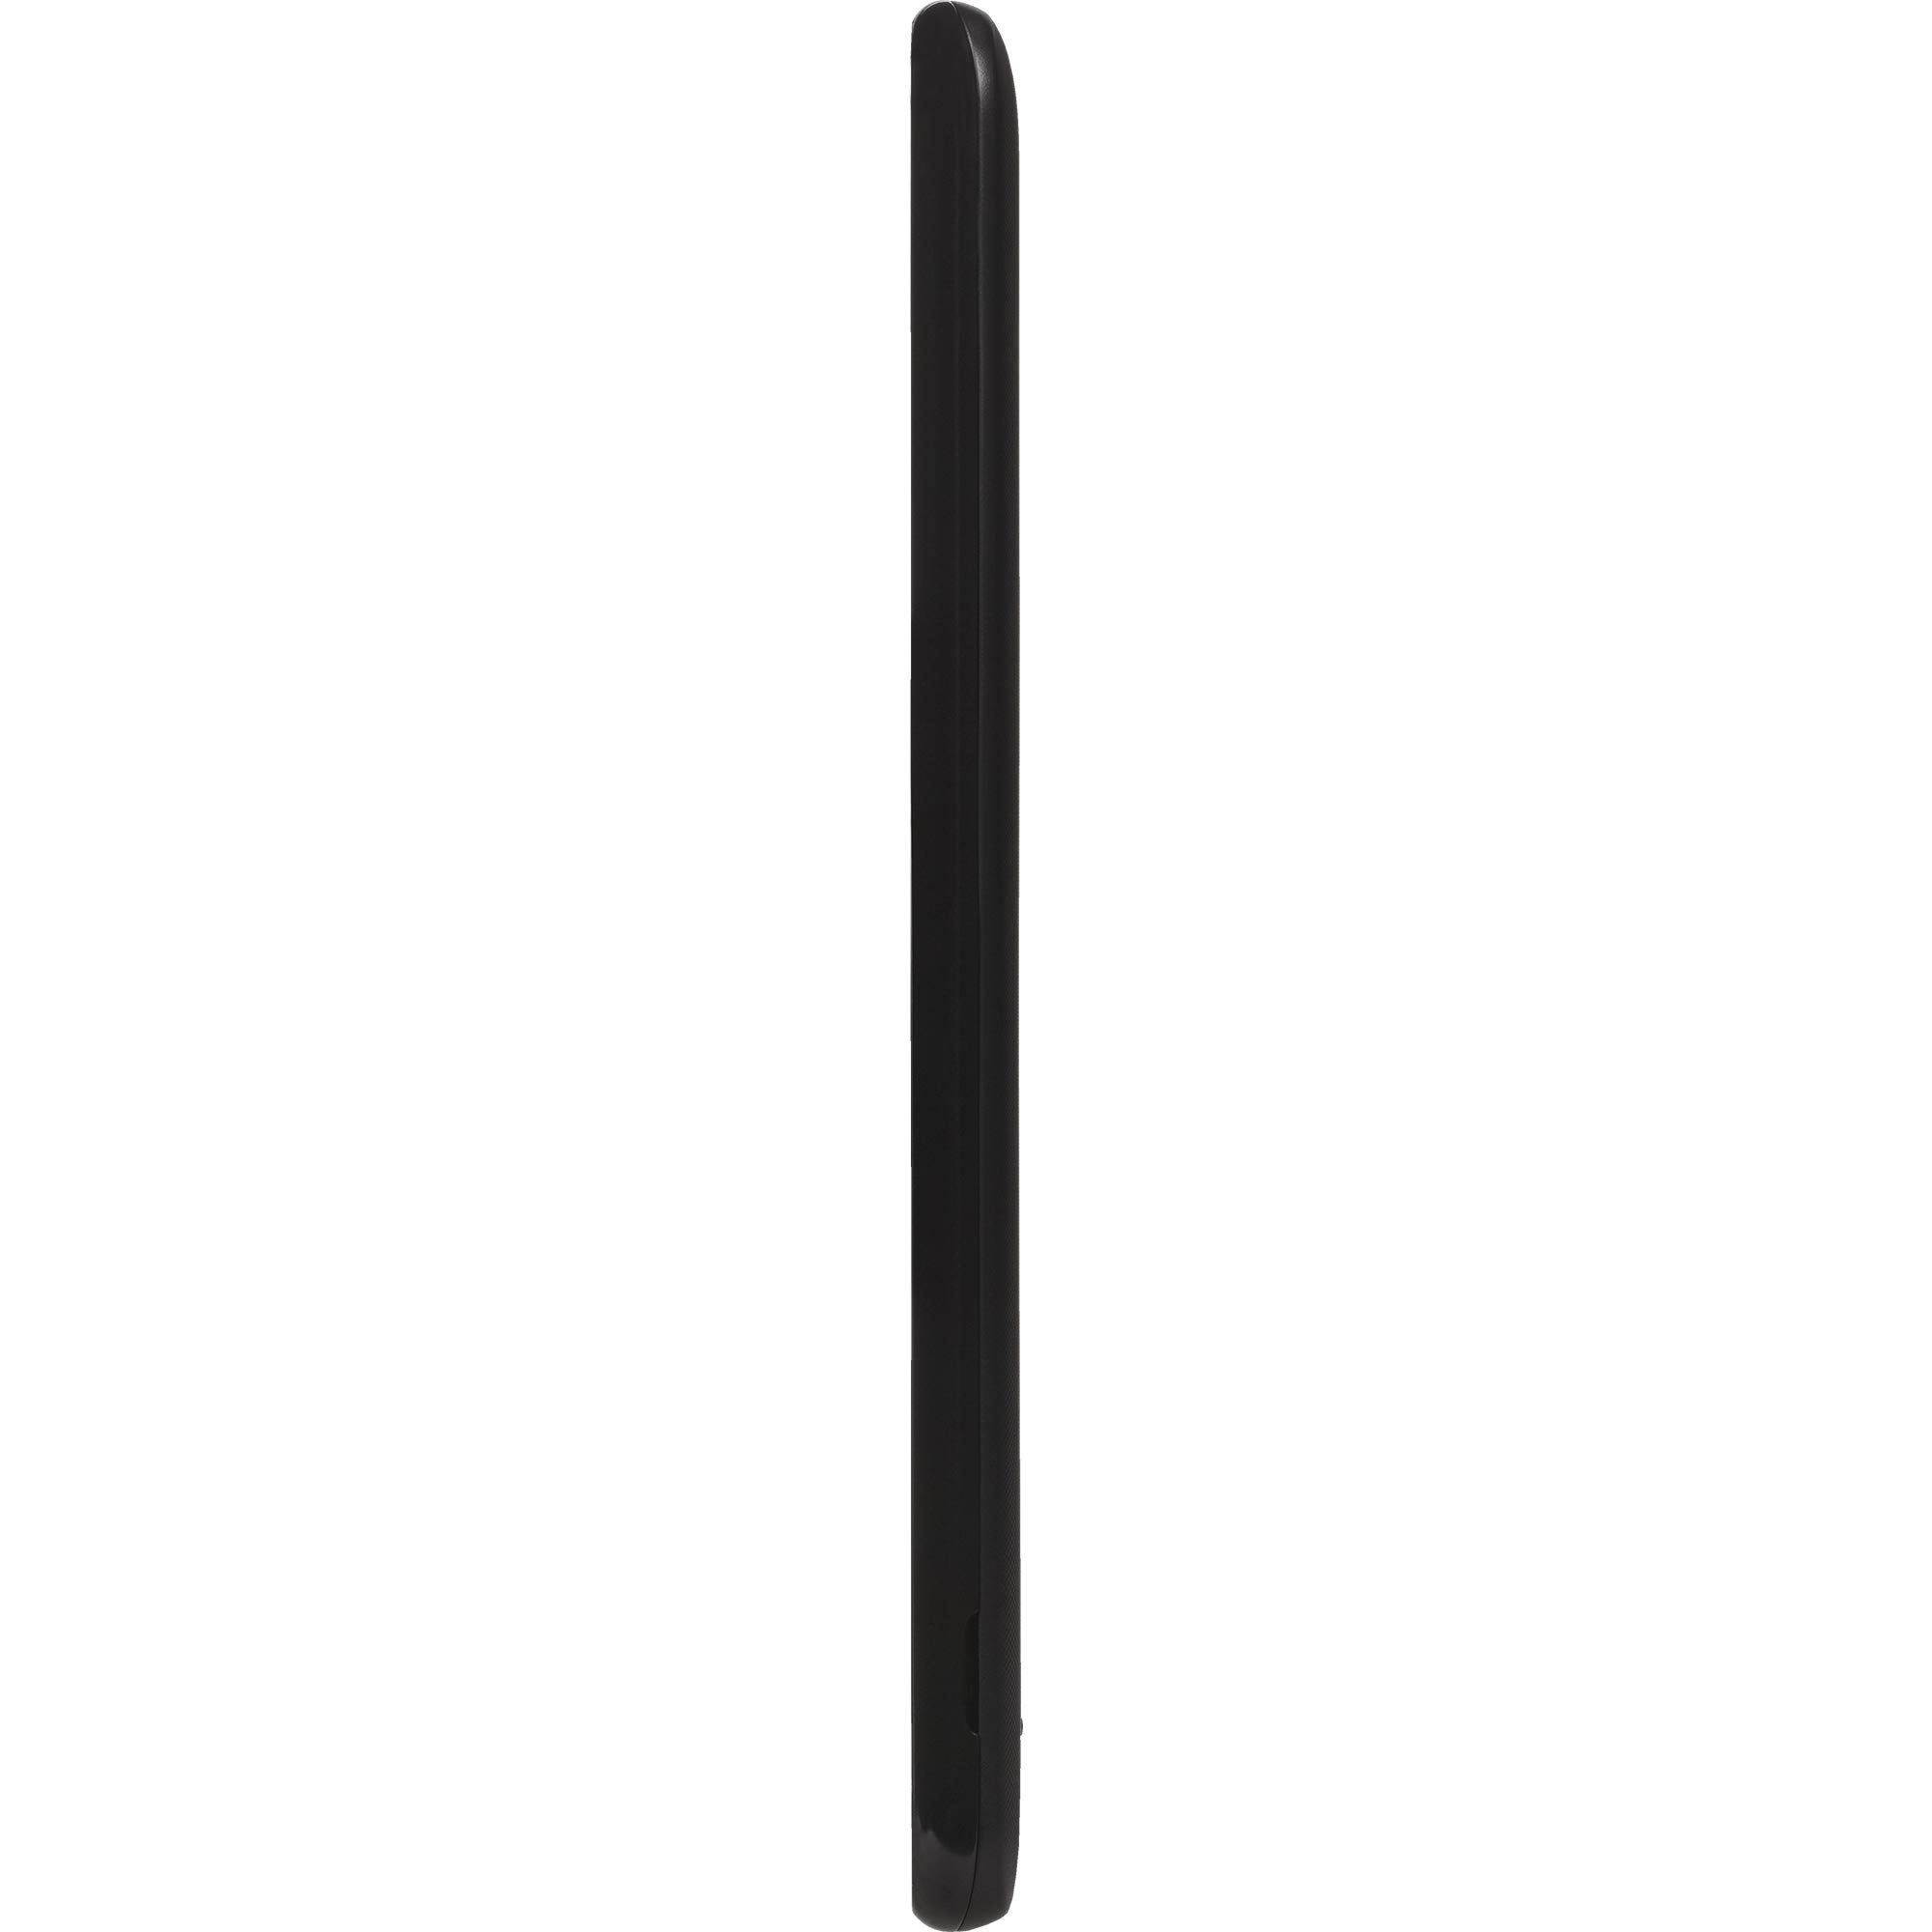 total wireless LG Rebel 4 4G LTE Prepaid Smartphone (Locked) - Black - 16GB - Sim Card Included - CDMA